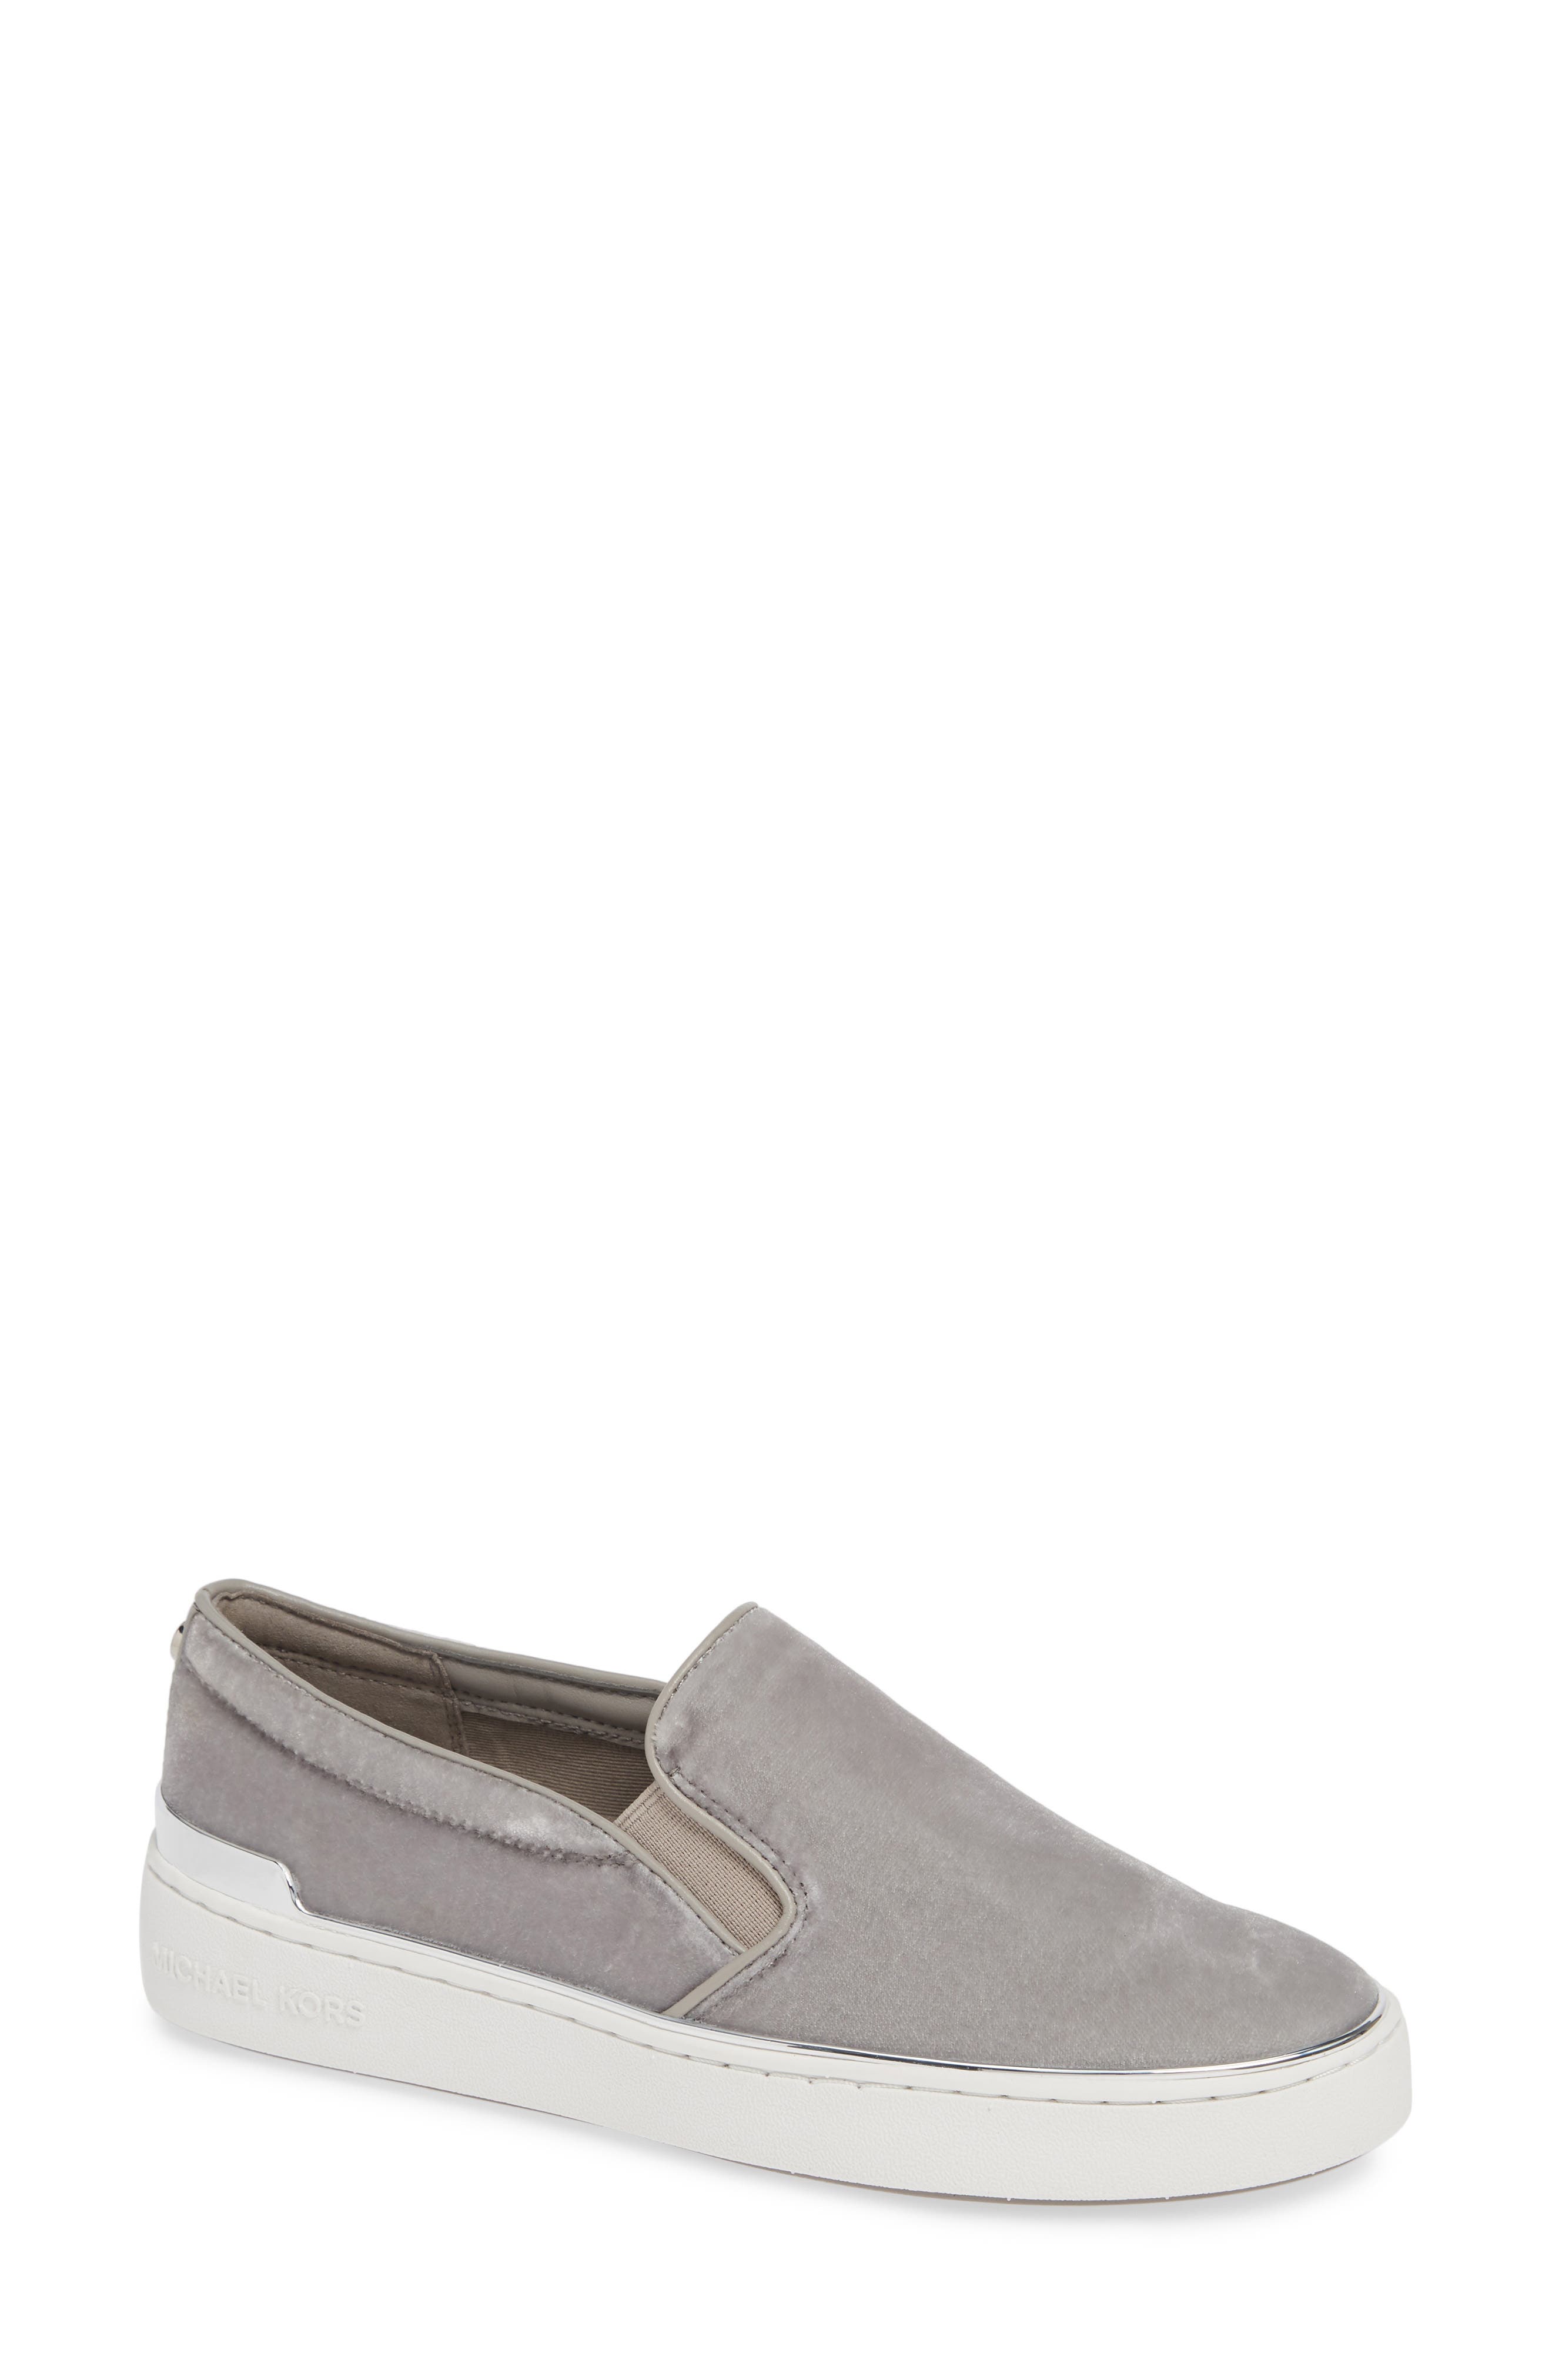 UPC 192837083124 product image for Women's Michael Michael Kors Kyle Slip-On Sneaker, Size 7 M - Grey | upcitemdb.com